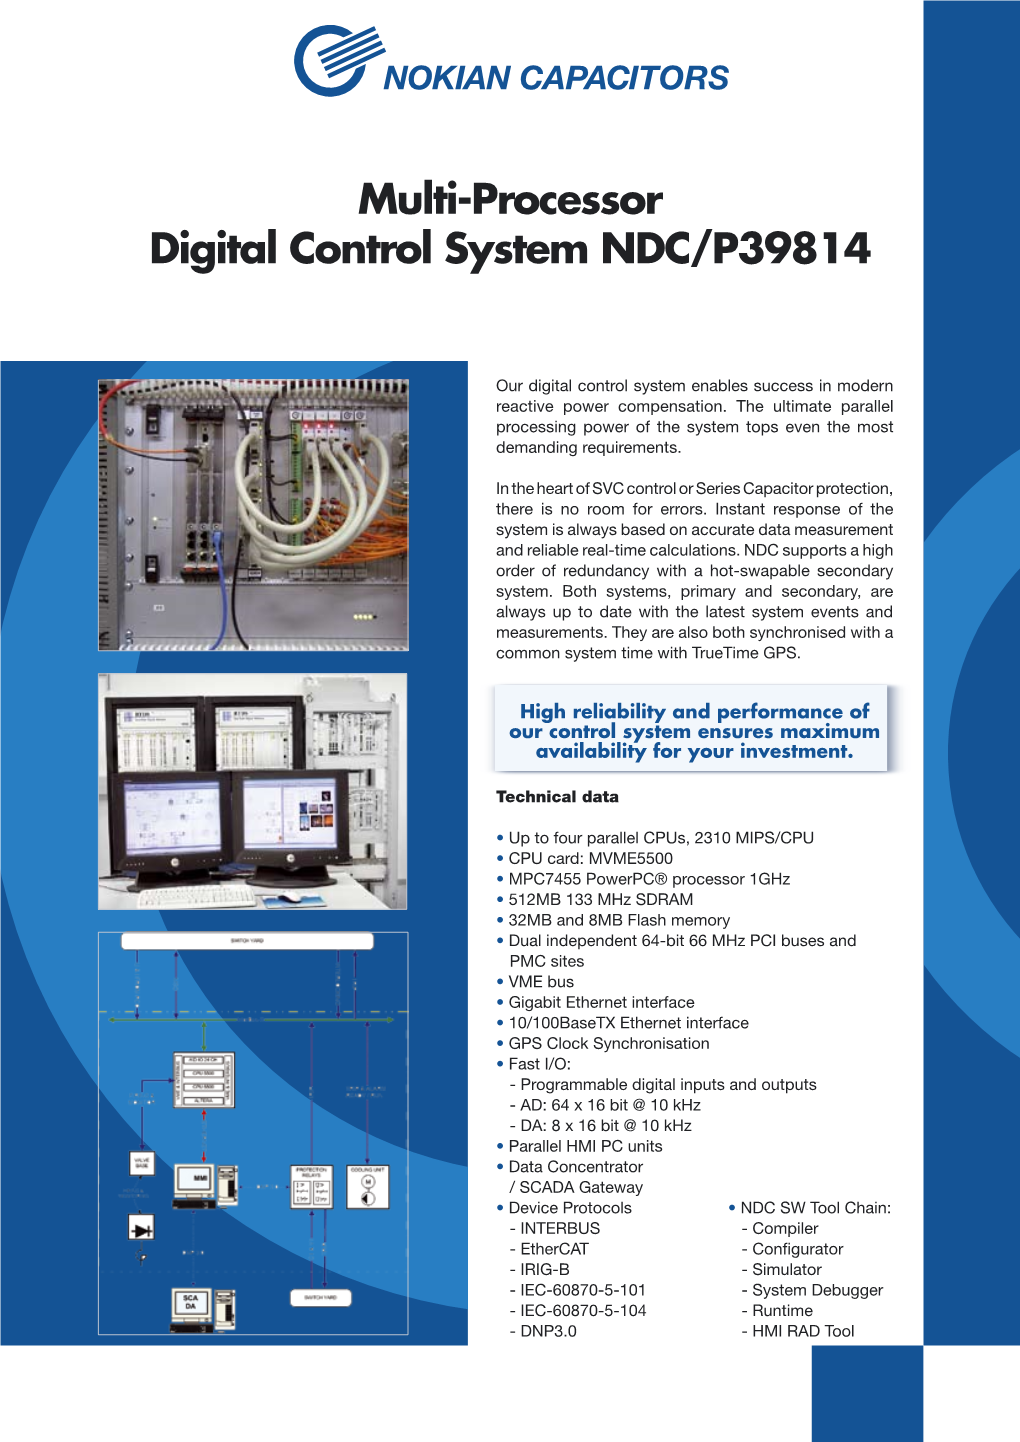 Multi-Processor Digital Control System NDC/P39814